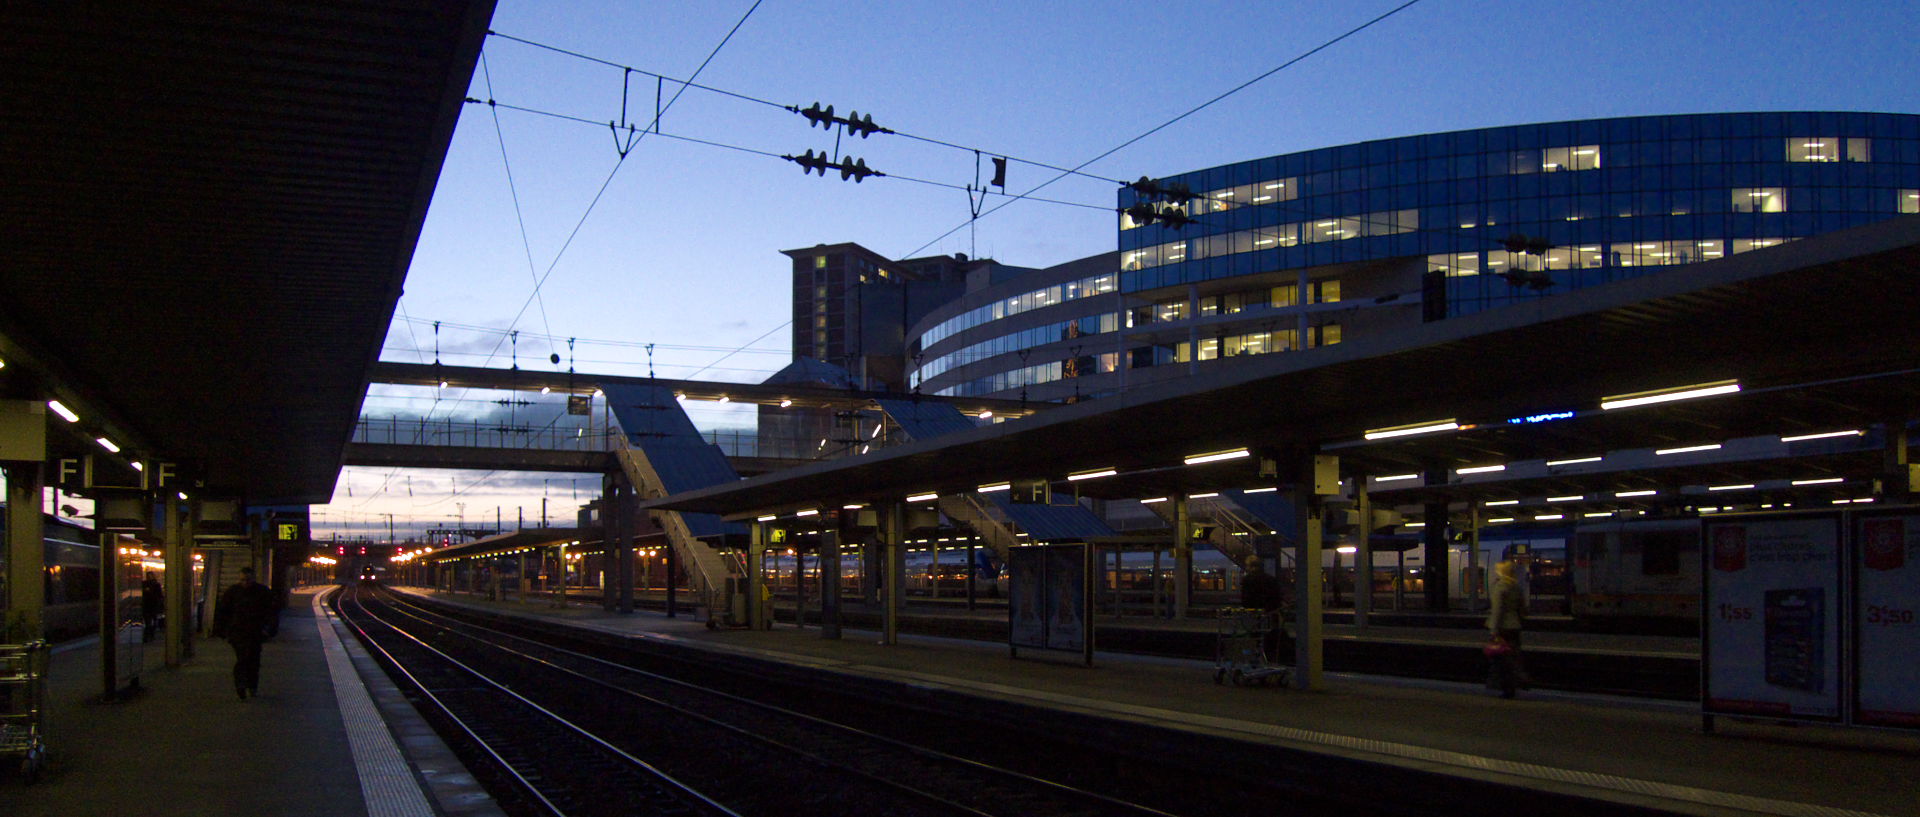 Mardi 20 janvier 2009, 8:10, gare de Lille Flandres.